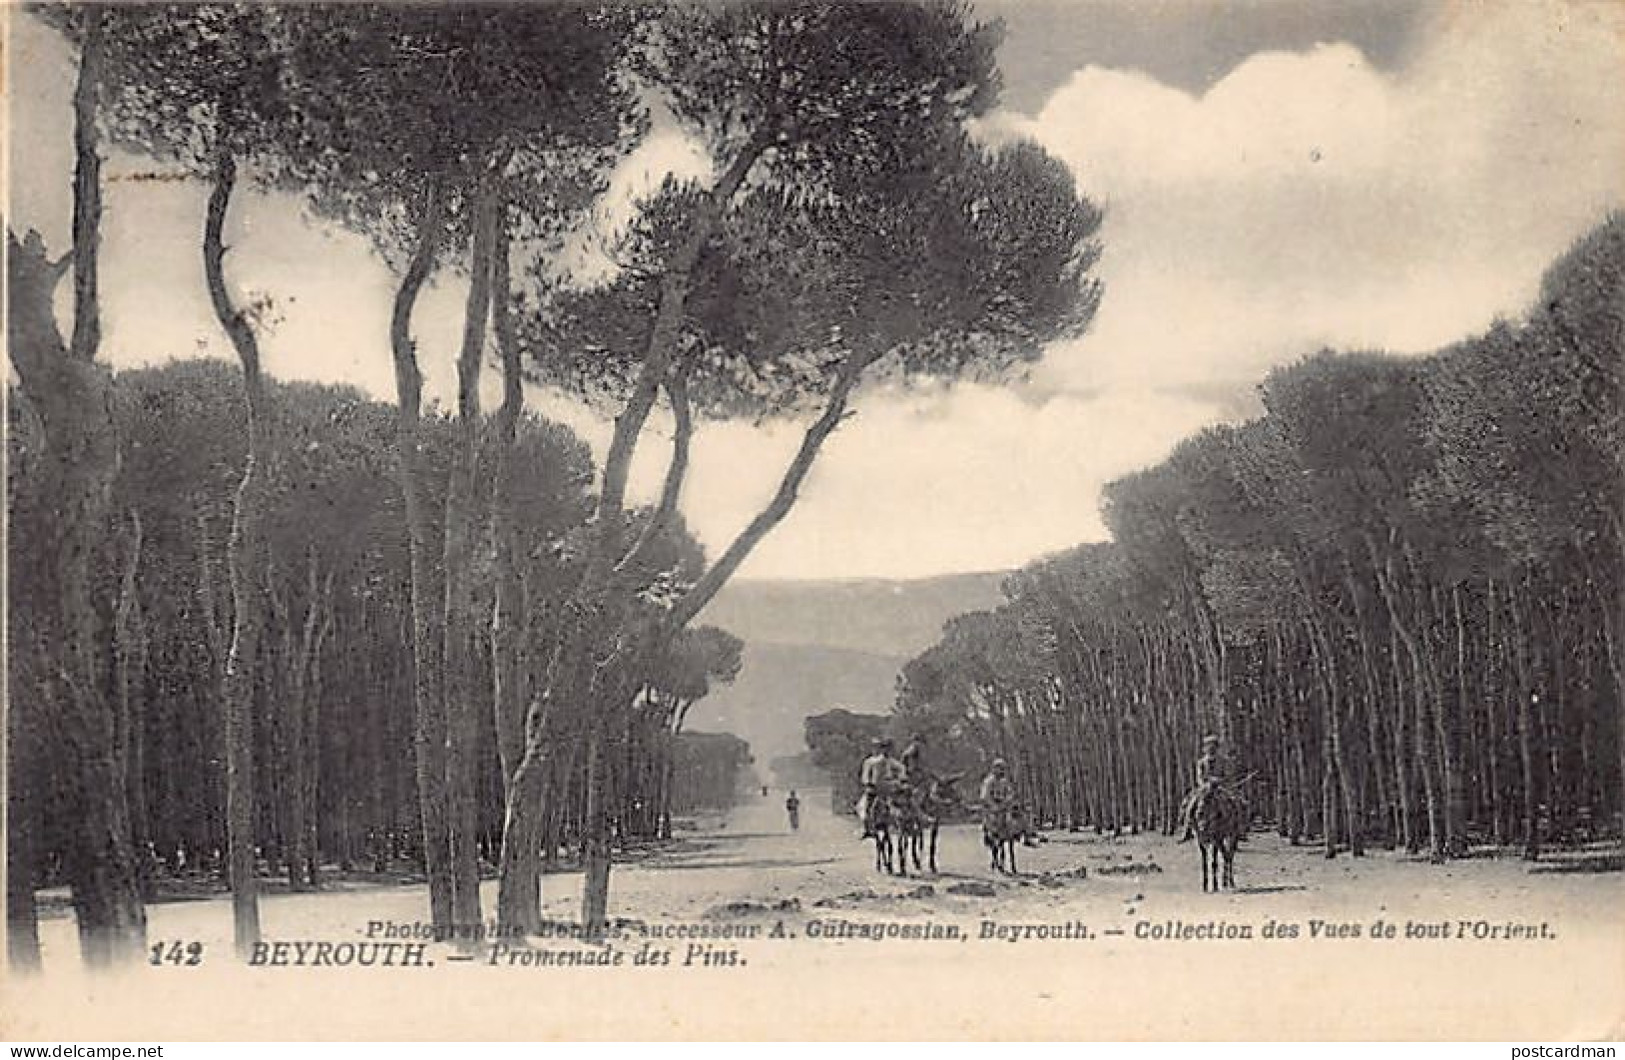 Liban - BEYROUTH - Promenade Des Pins - Ed. Photographie Bonfils, Successeur A. Guiragossian 142 - Libano